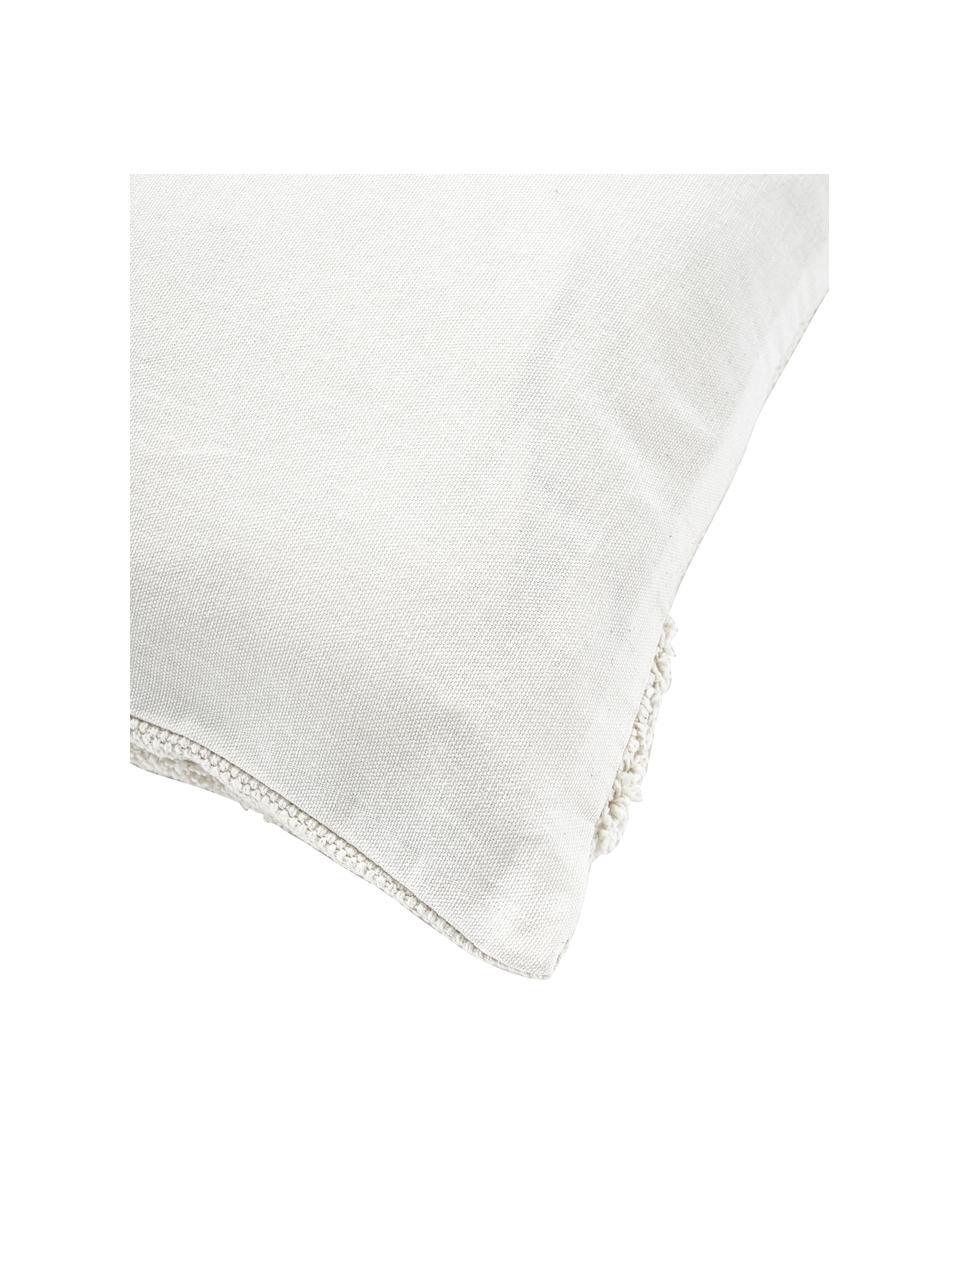 Funda de cojín texturizada Laerke, estilo boho, 100% algodón ecológico con certificado BCI, Crema, An 45 x L 45 cm